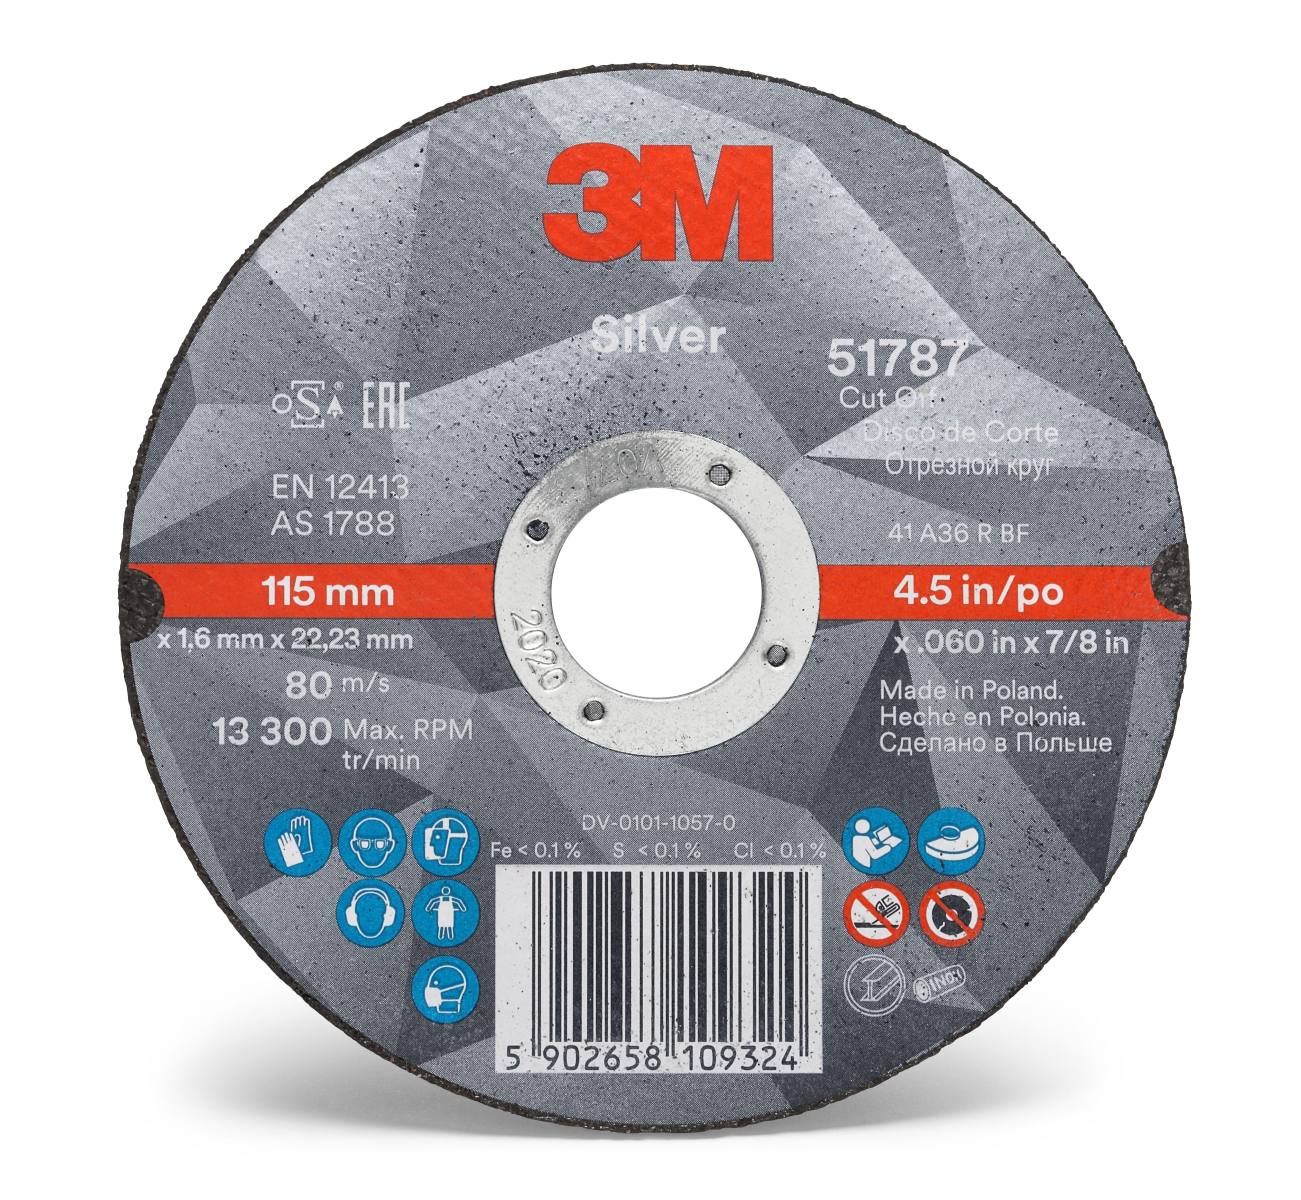 Disco da taglio 3M Silver Cut-Off, 115 mm, 1,6 mm, 22,23 mm, T41, 51787